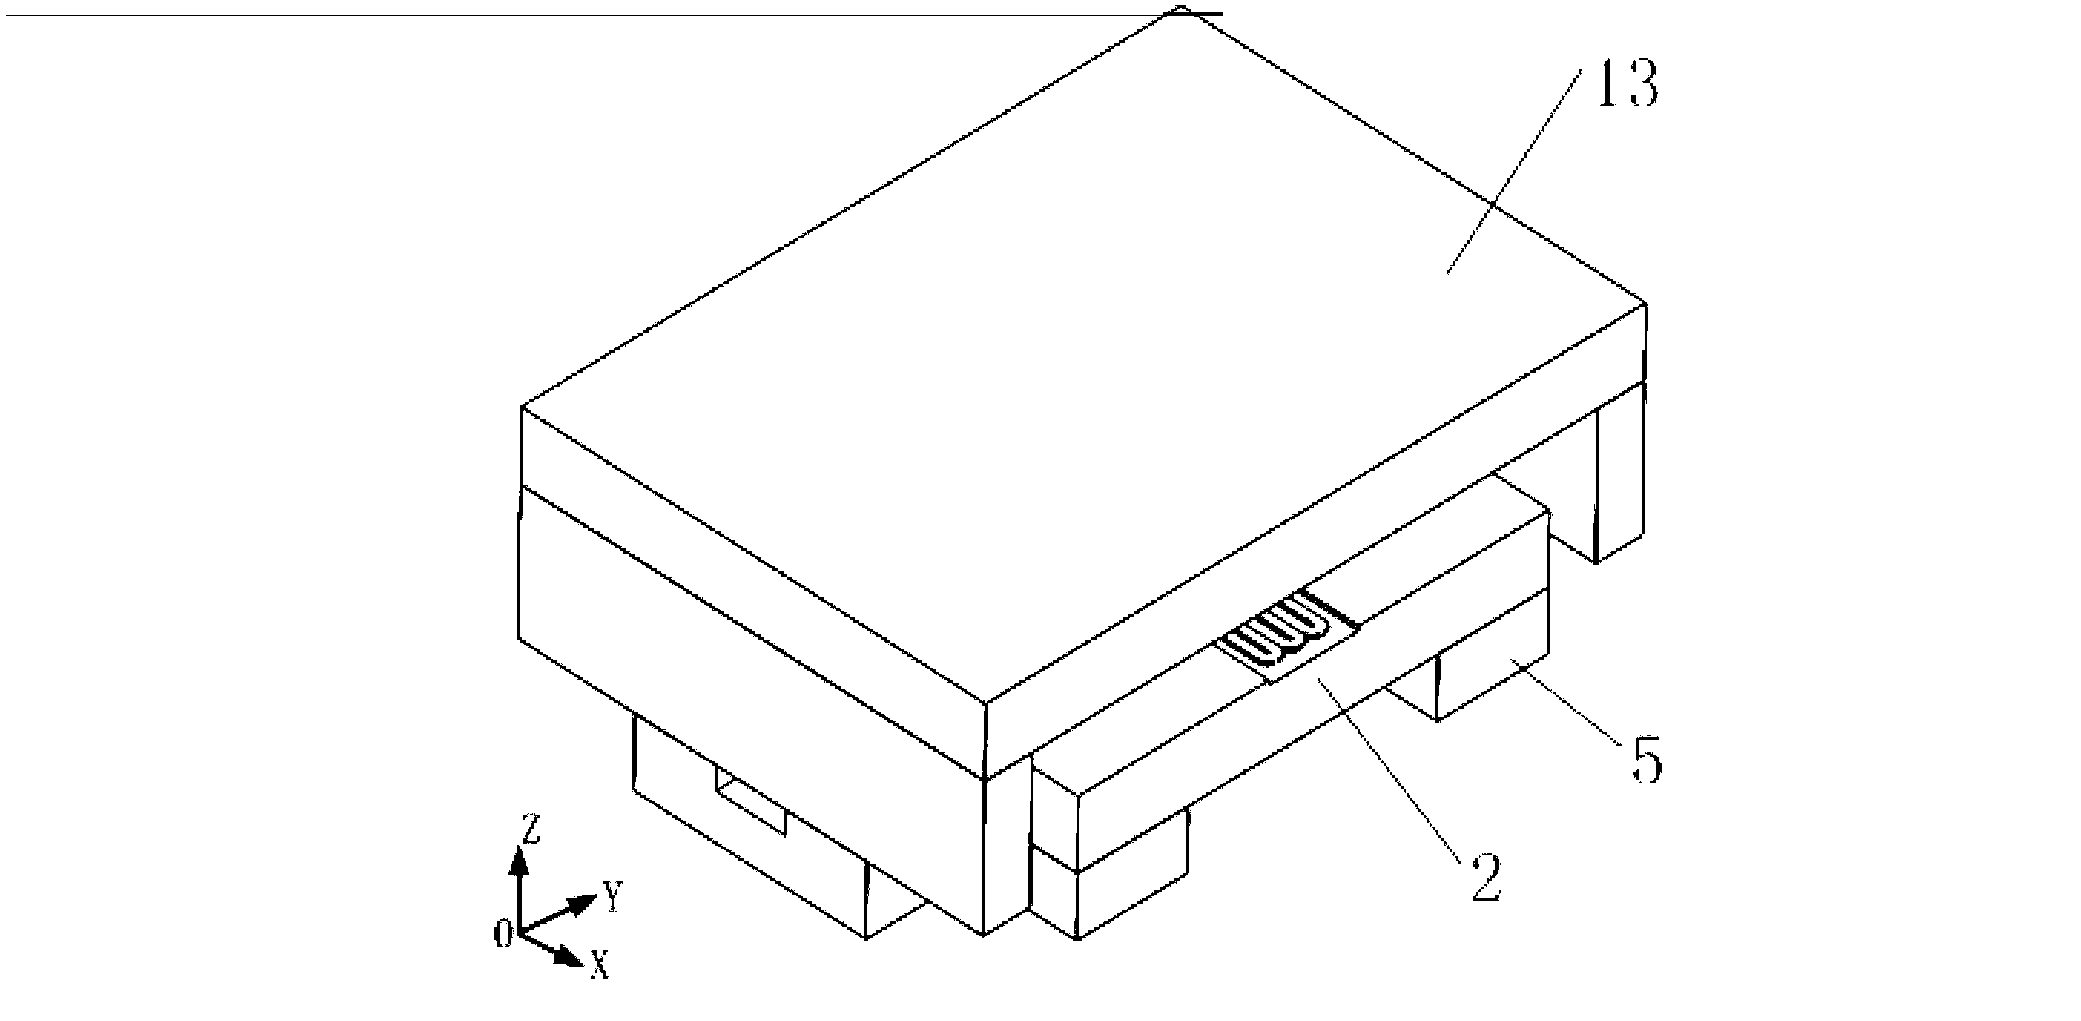 Rough-fine-movement laminated workbench with laser interferometer measurement